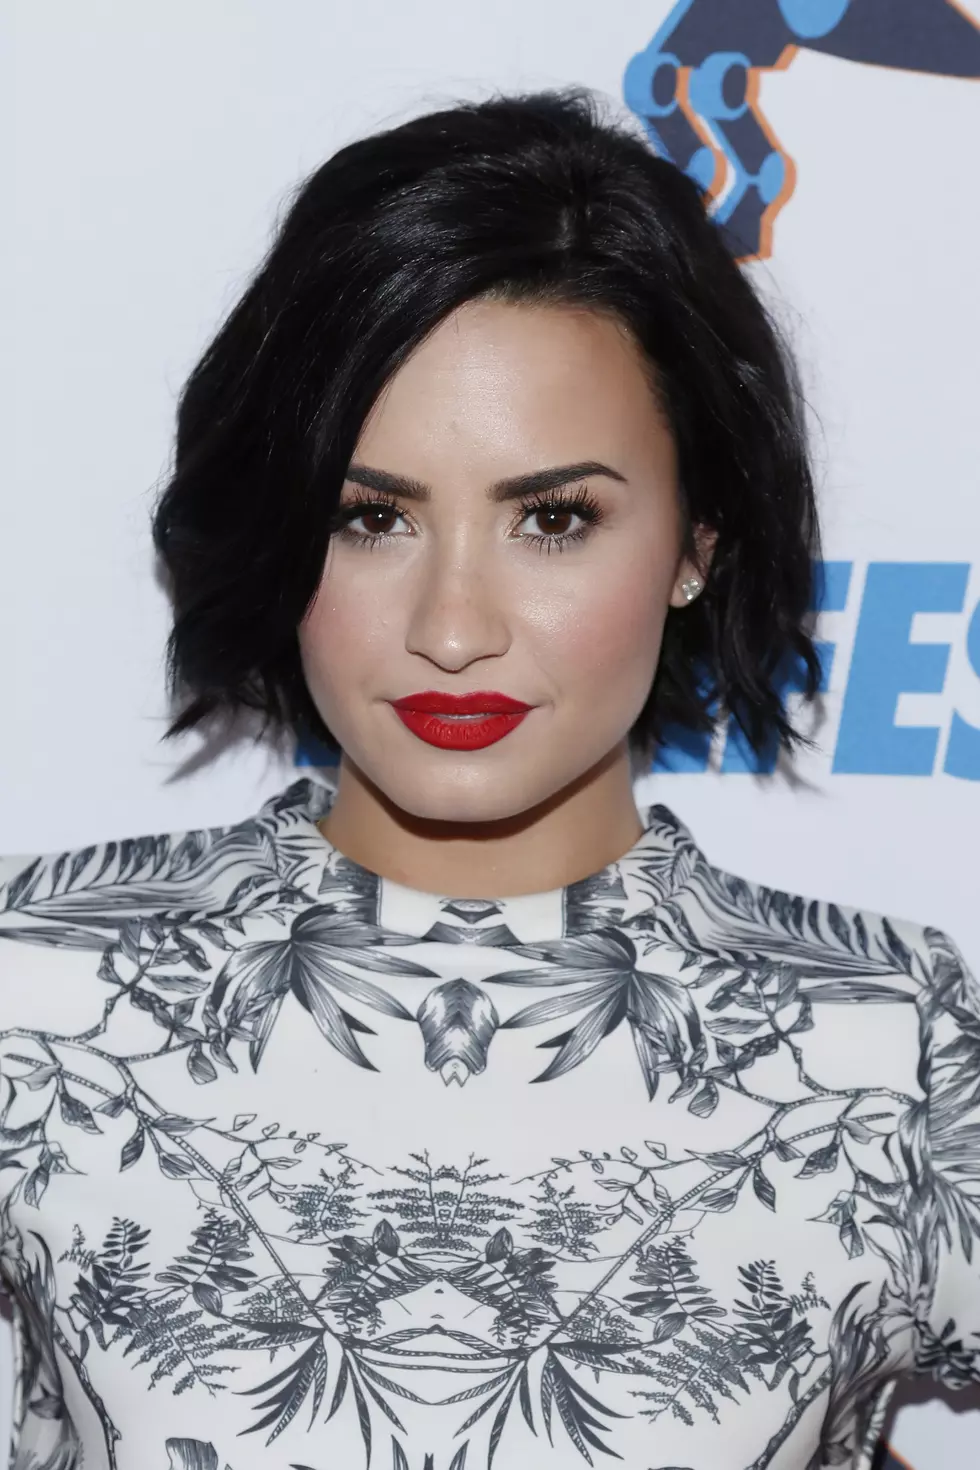 [WATCH] Demi Lovato Looks “Confident” On “SNL”